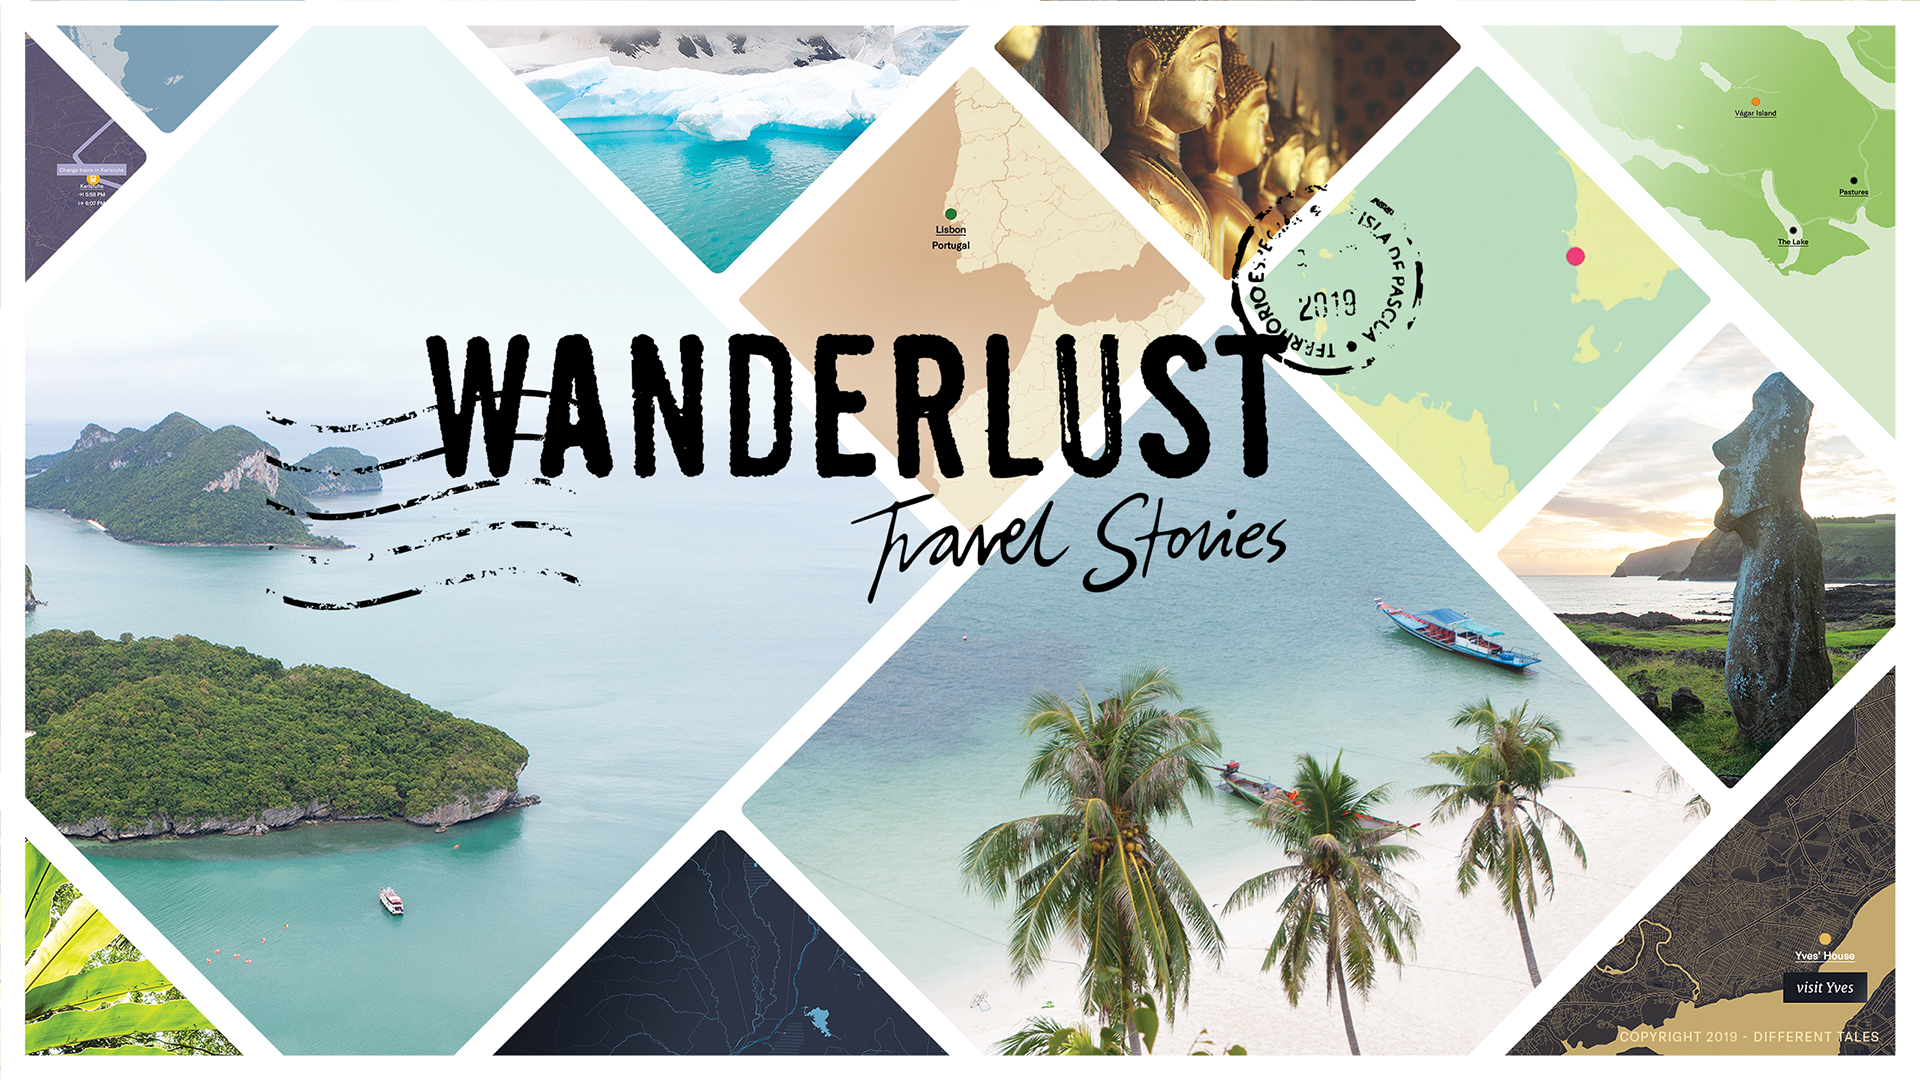 Wanderlust Travel Stories Windows, Mac, iOS game